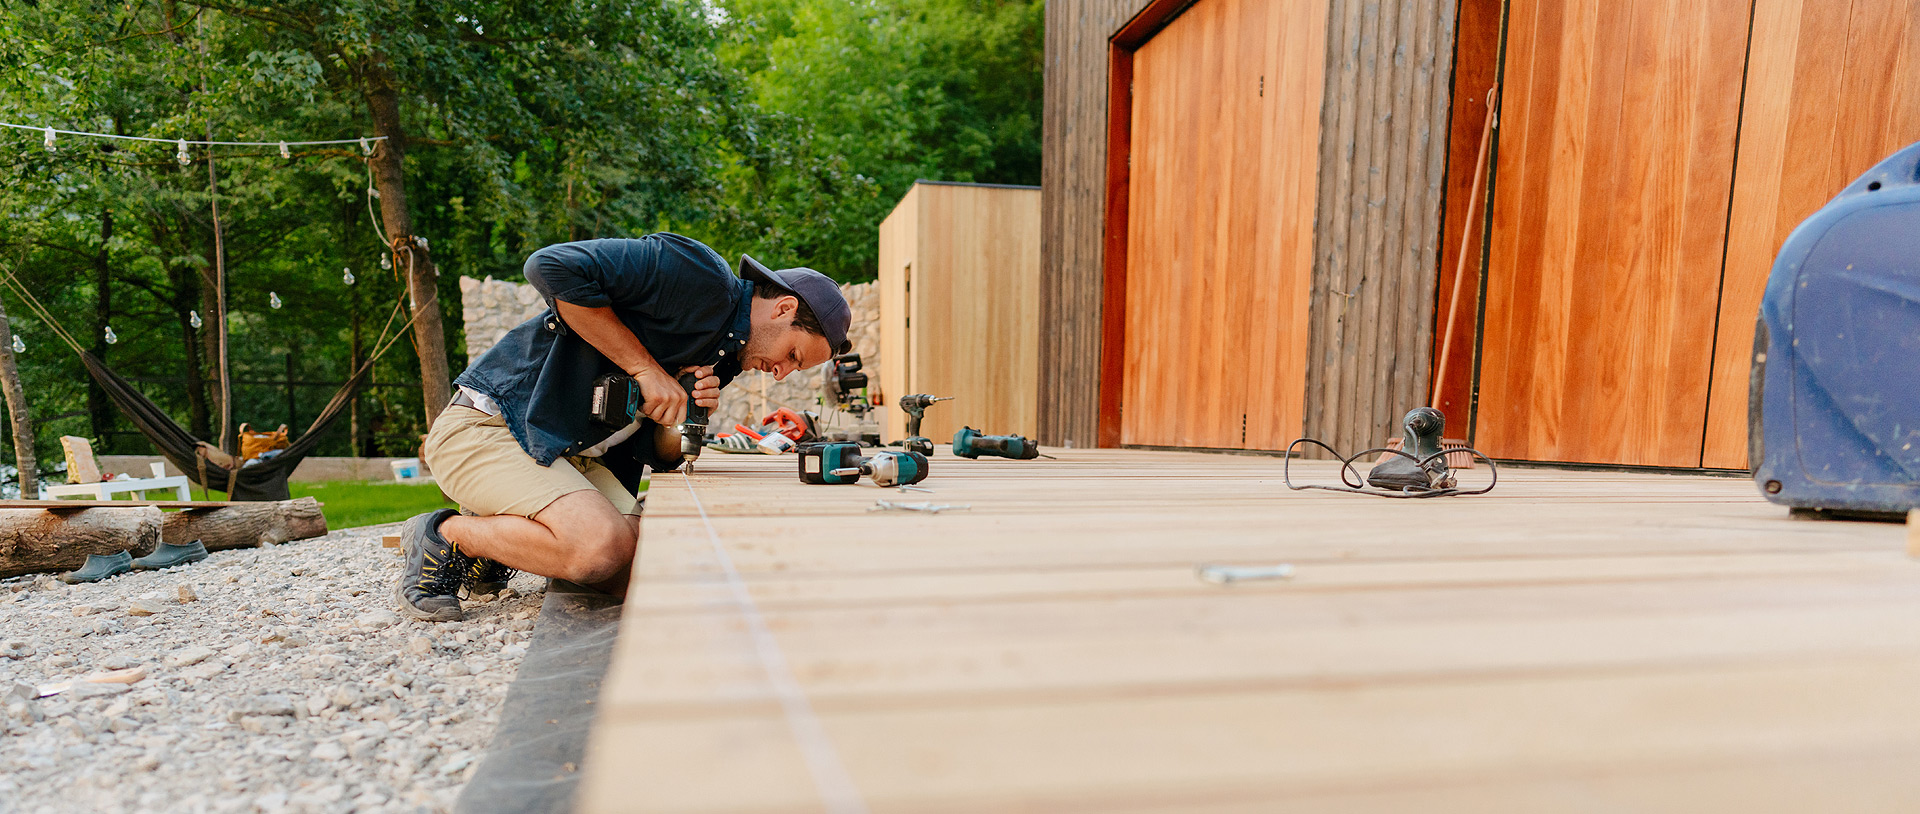 Elite Composite Deck Installation Services - Enhance Your Outdoor Living